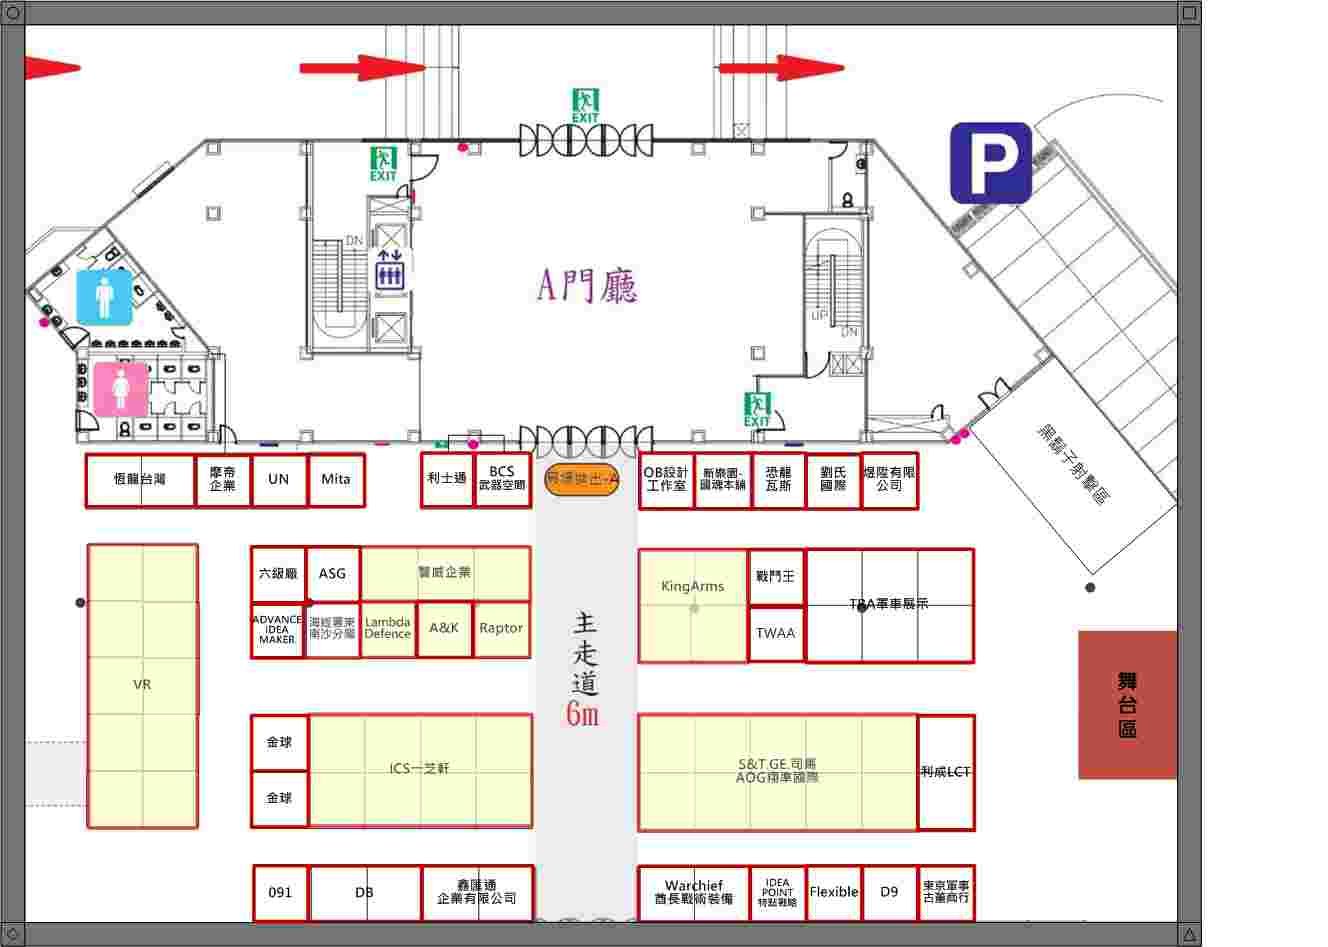 2019 Hooha Show 25th-Booth Map